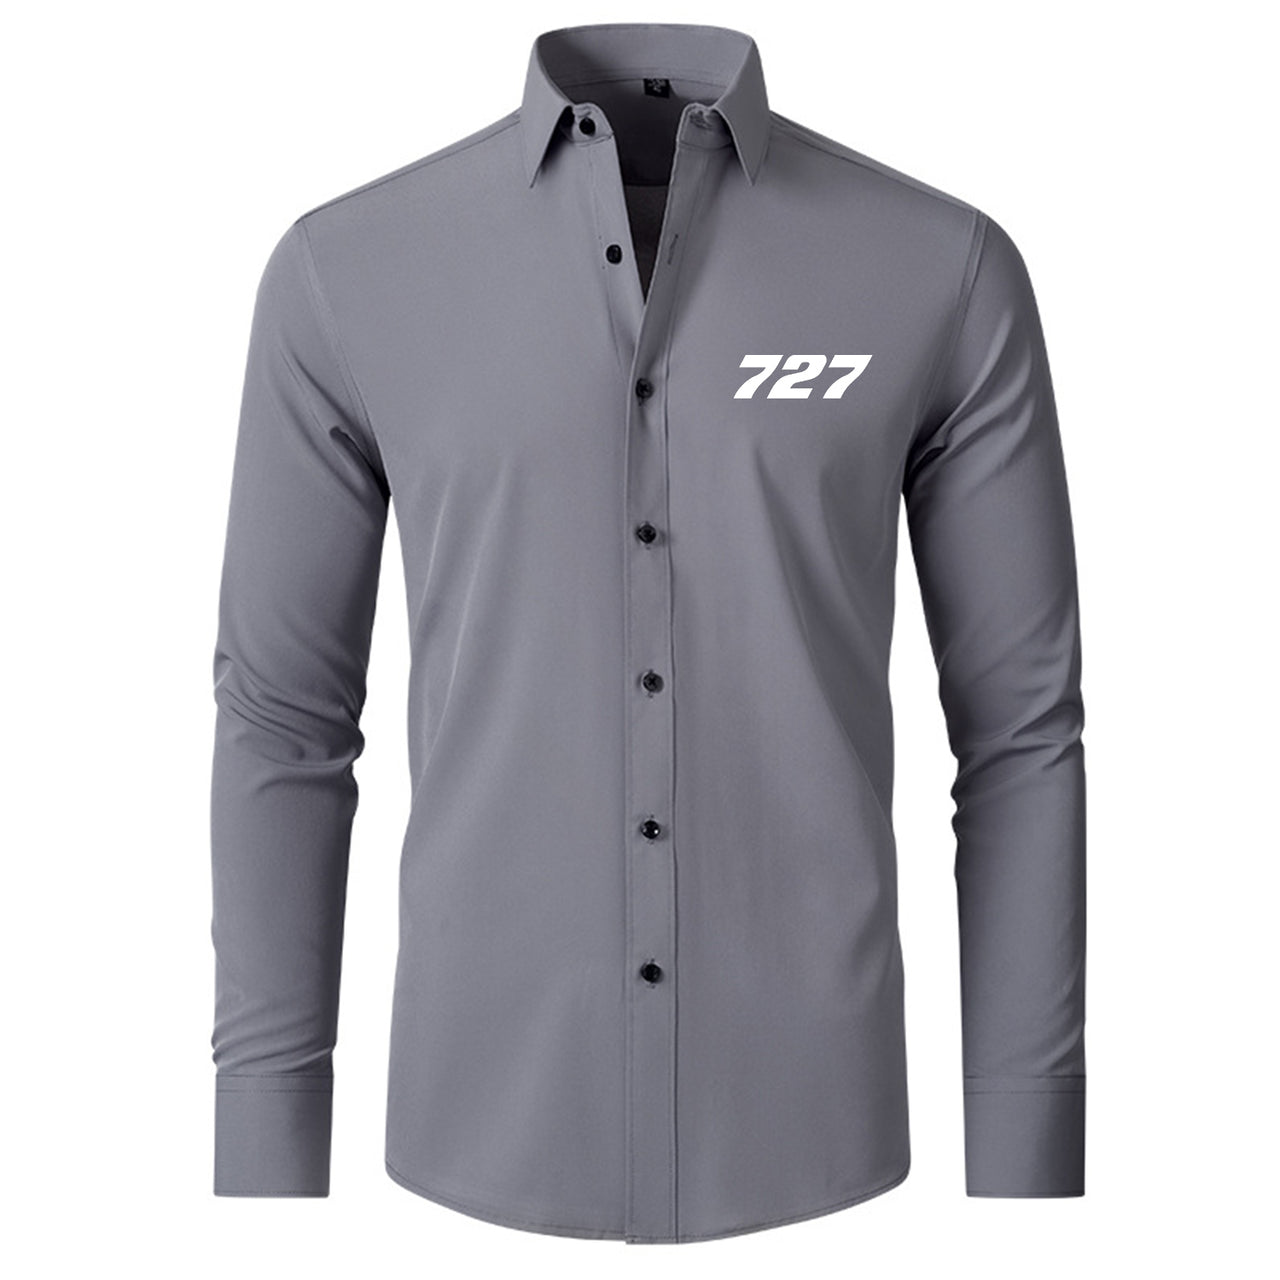 727 Flat Text Designed Long Sleeve Shirts